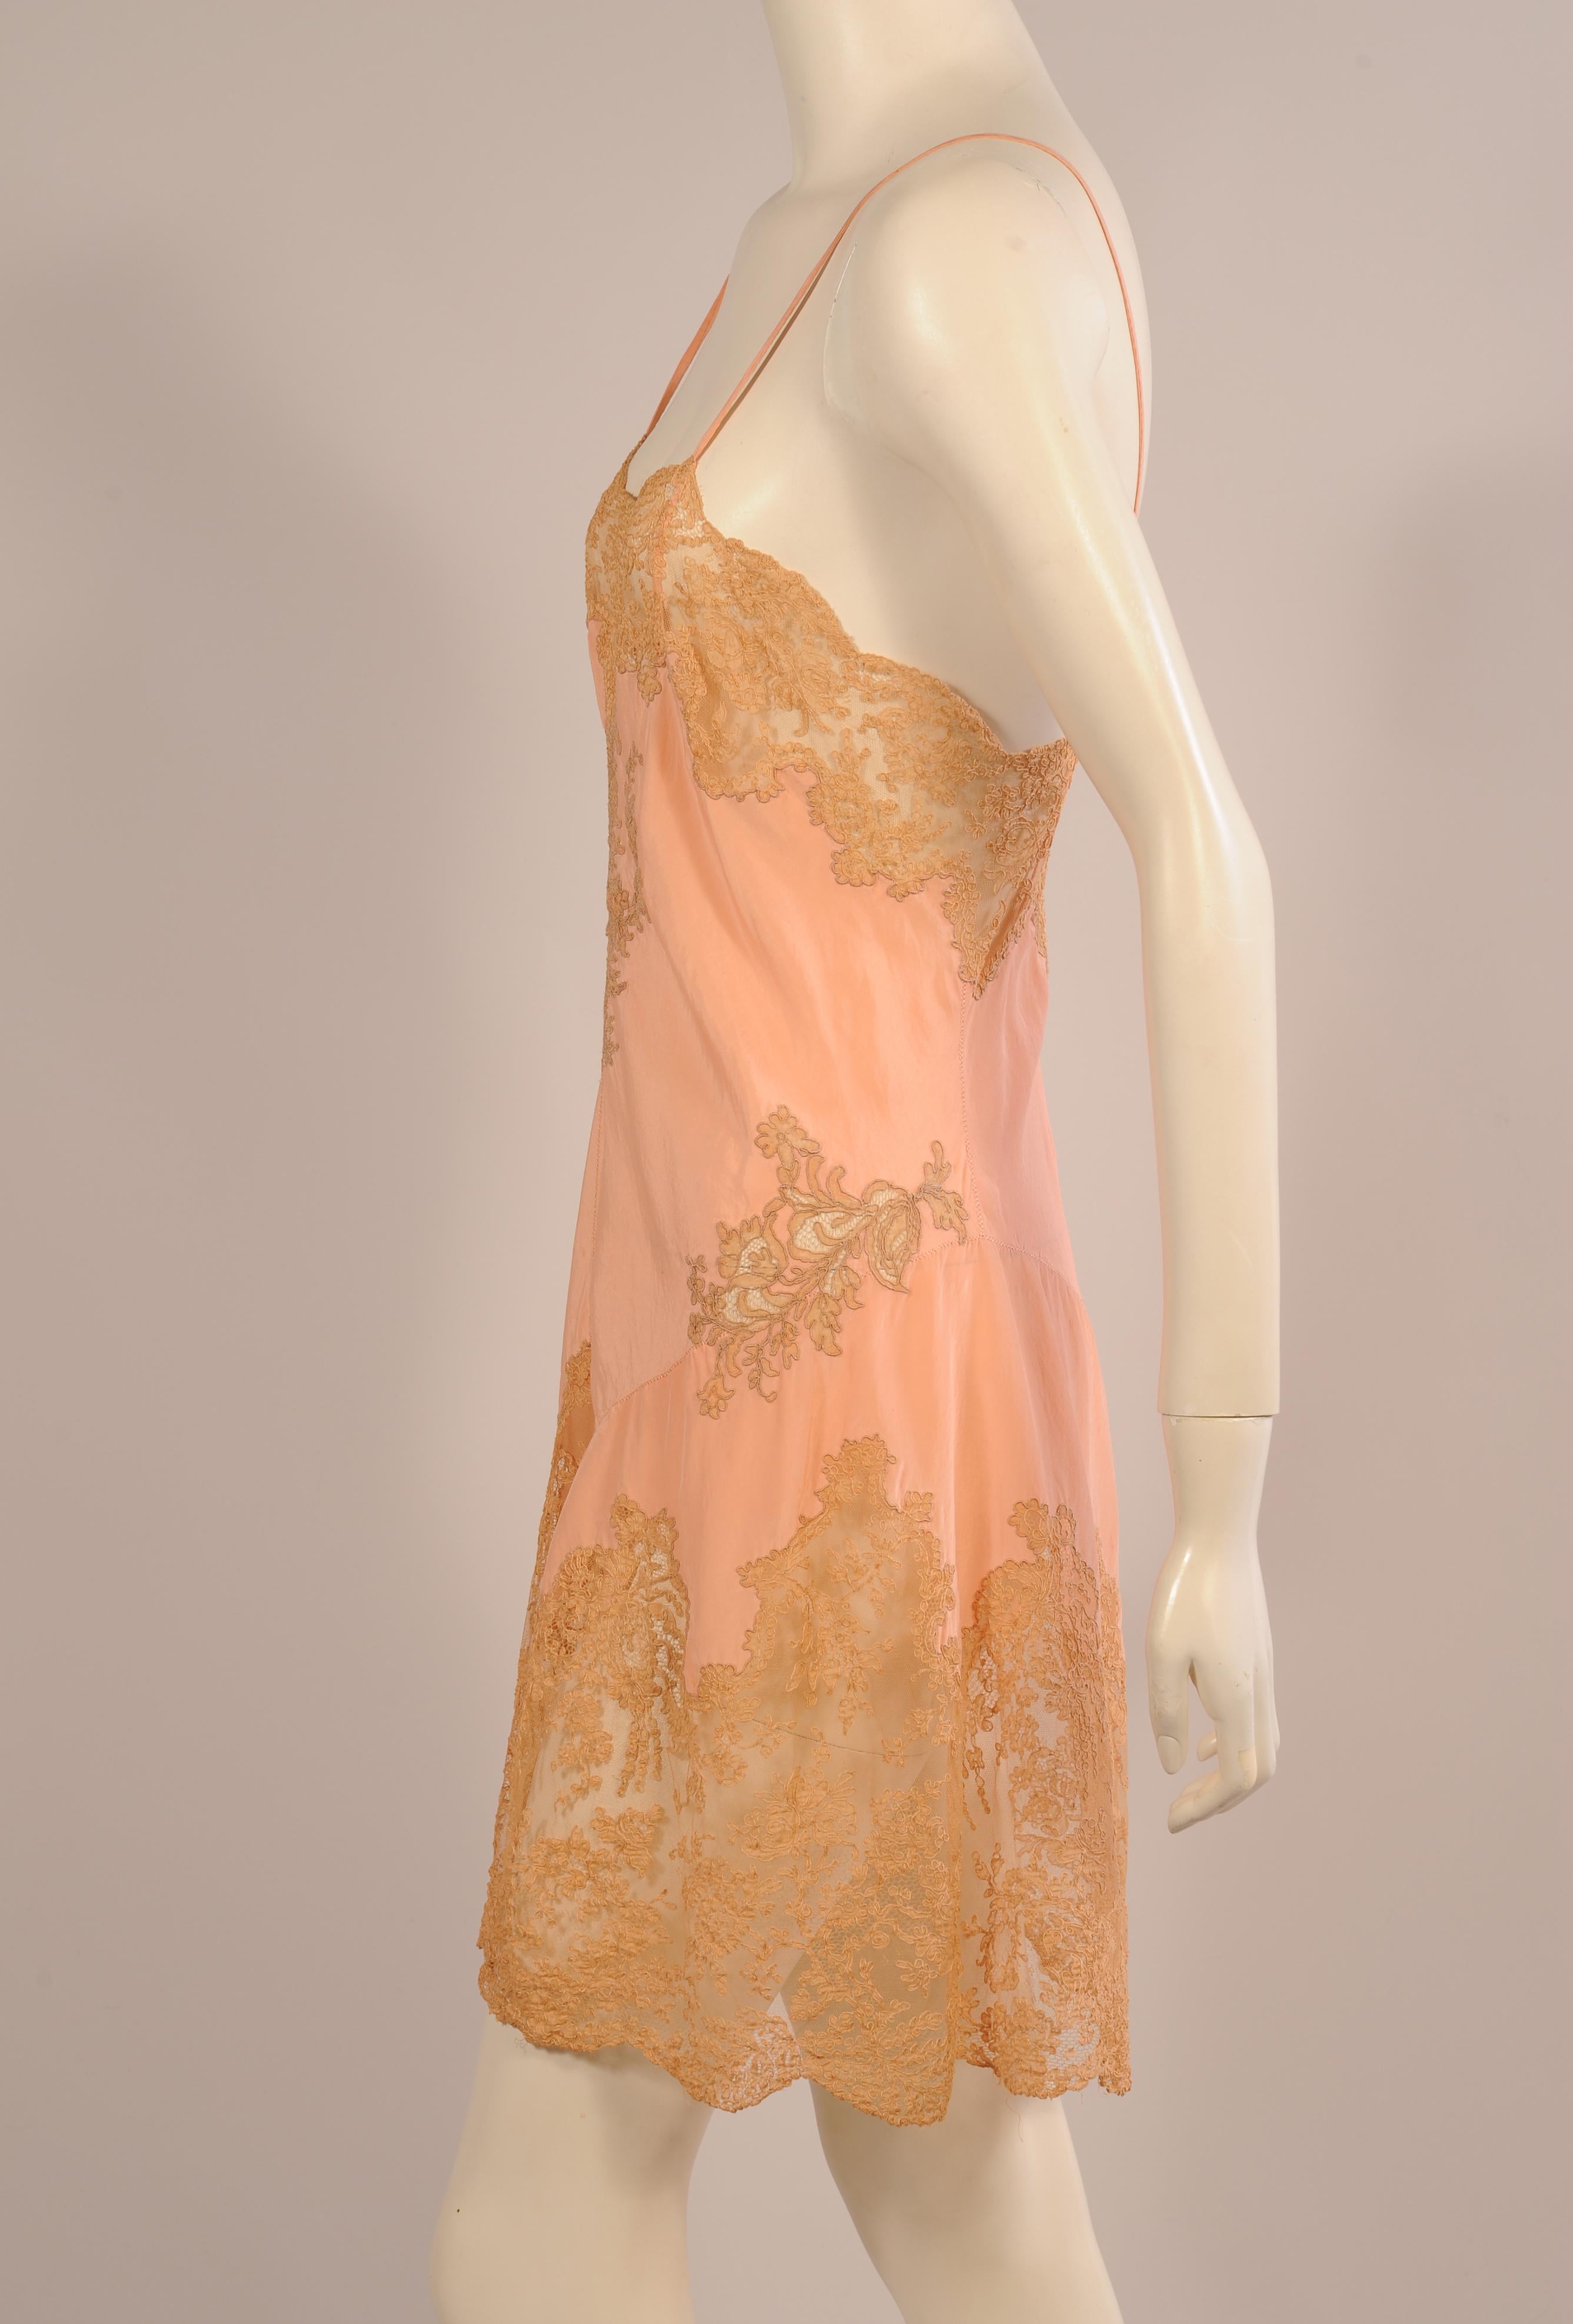 Women's French Handmade Alencon Lace and Silk Slip, 1920s 